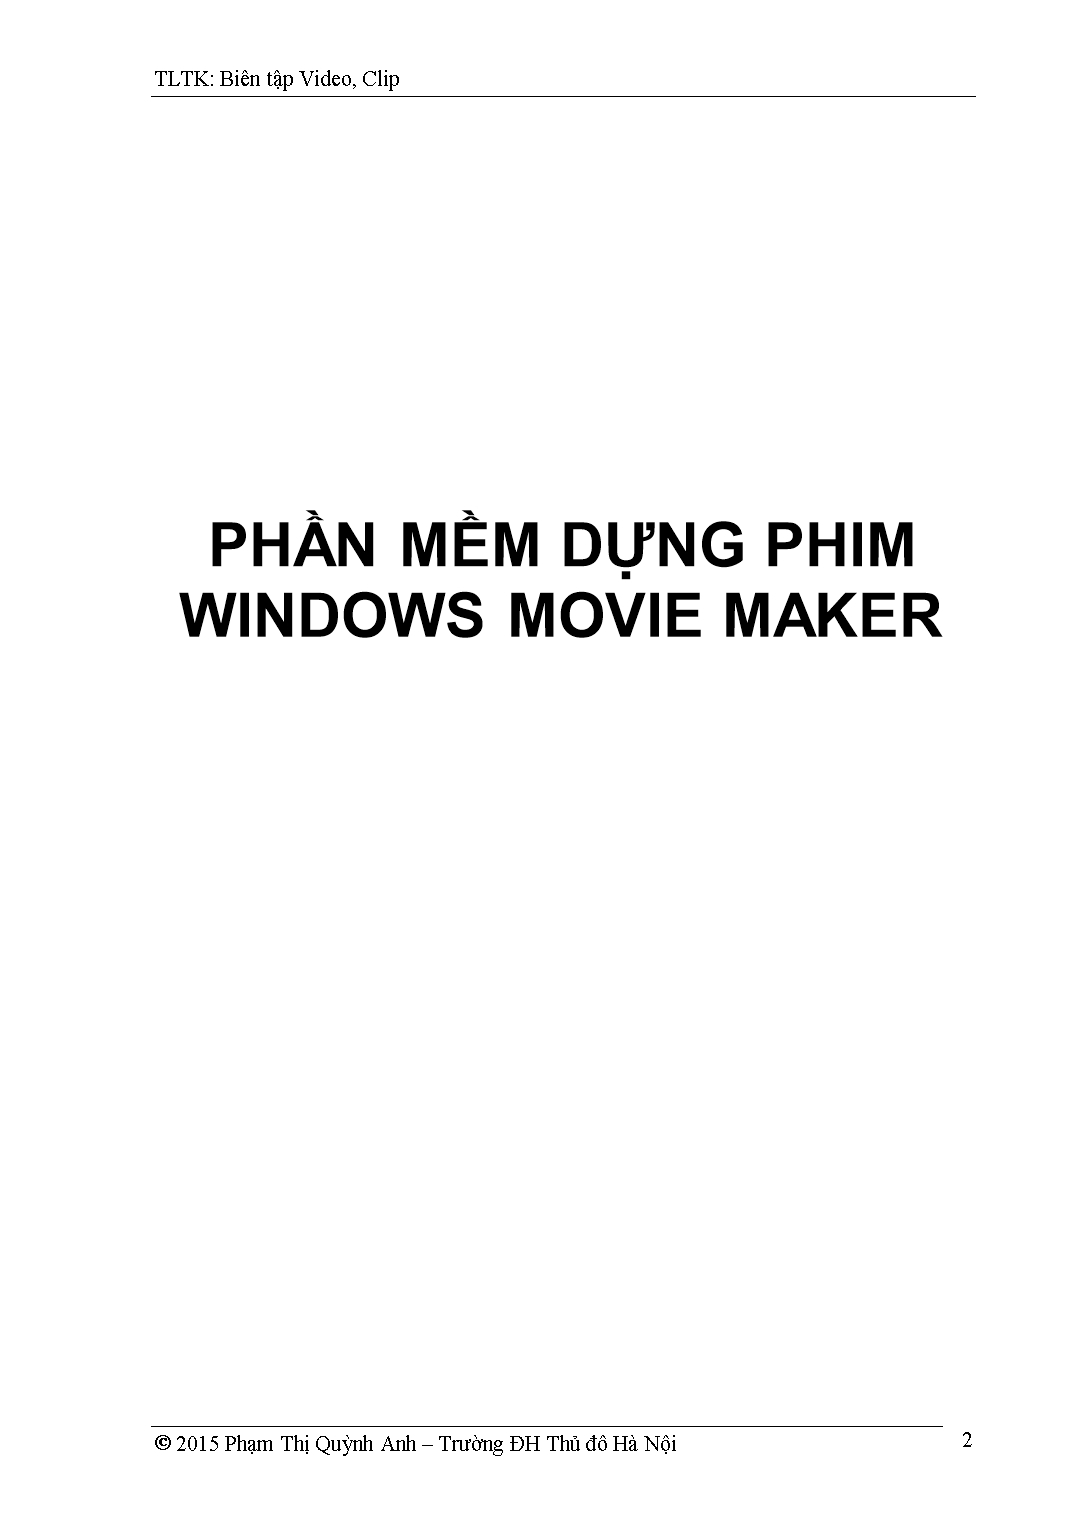 Phần mềm dựng phim Windows Movie Maker trang 2